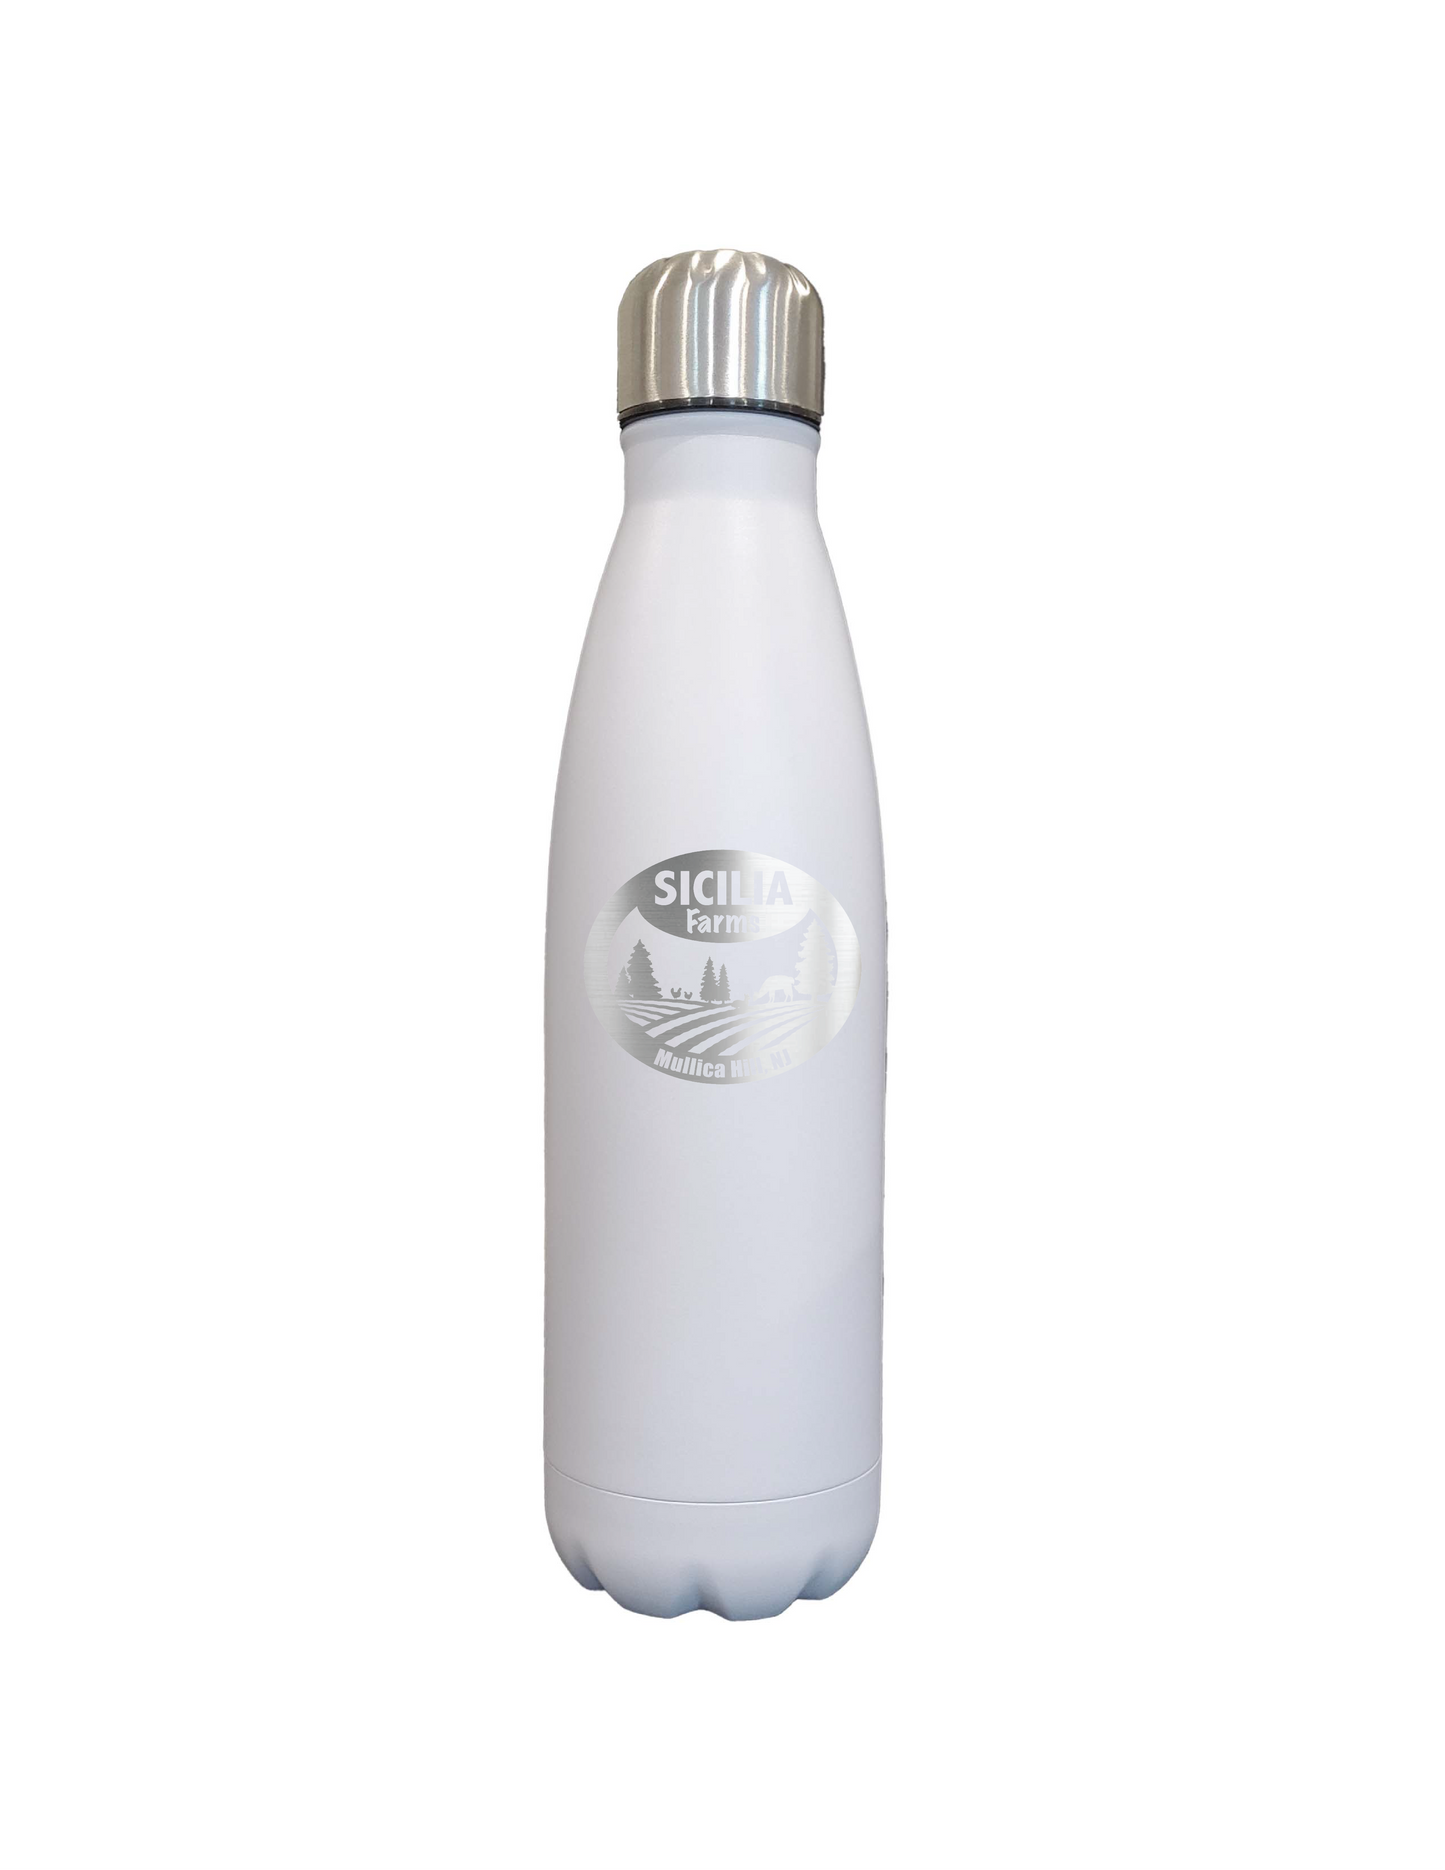 Sicilia Farms - Vacuum insulated bottle